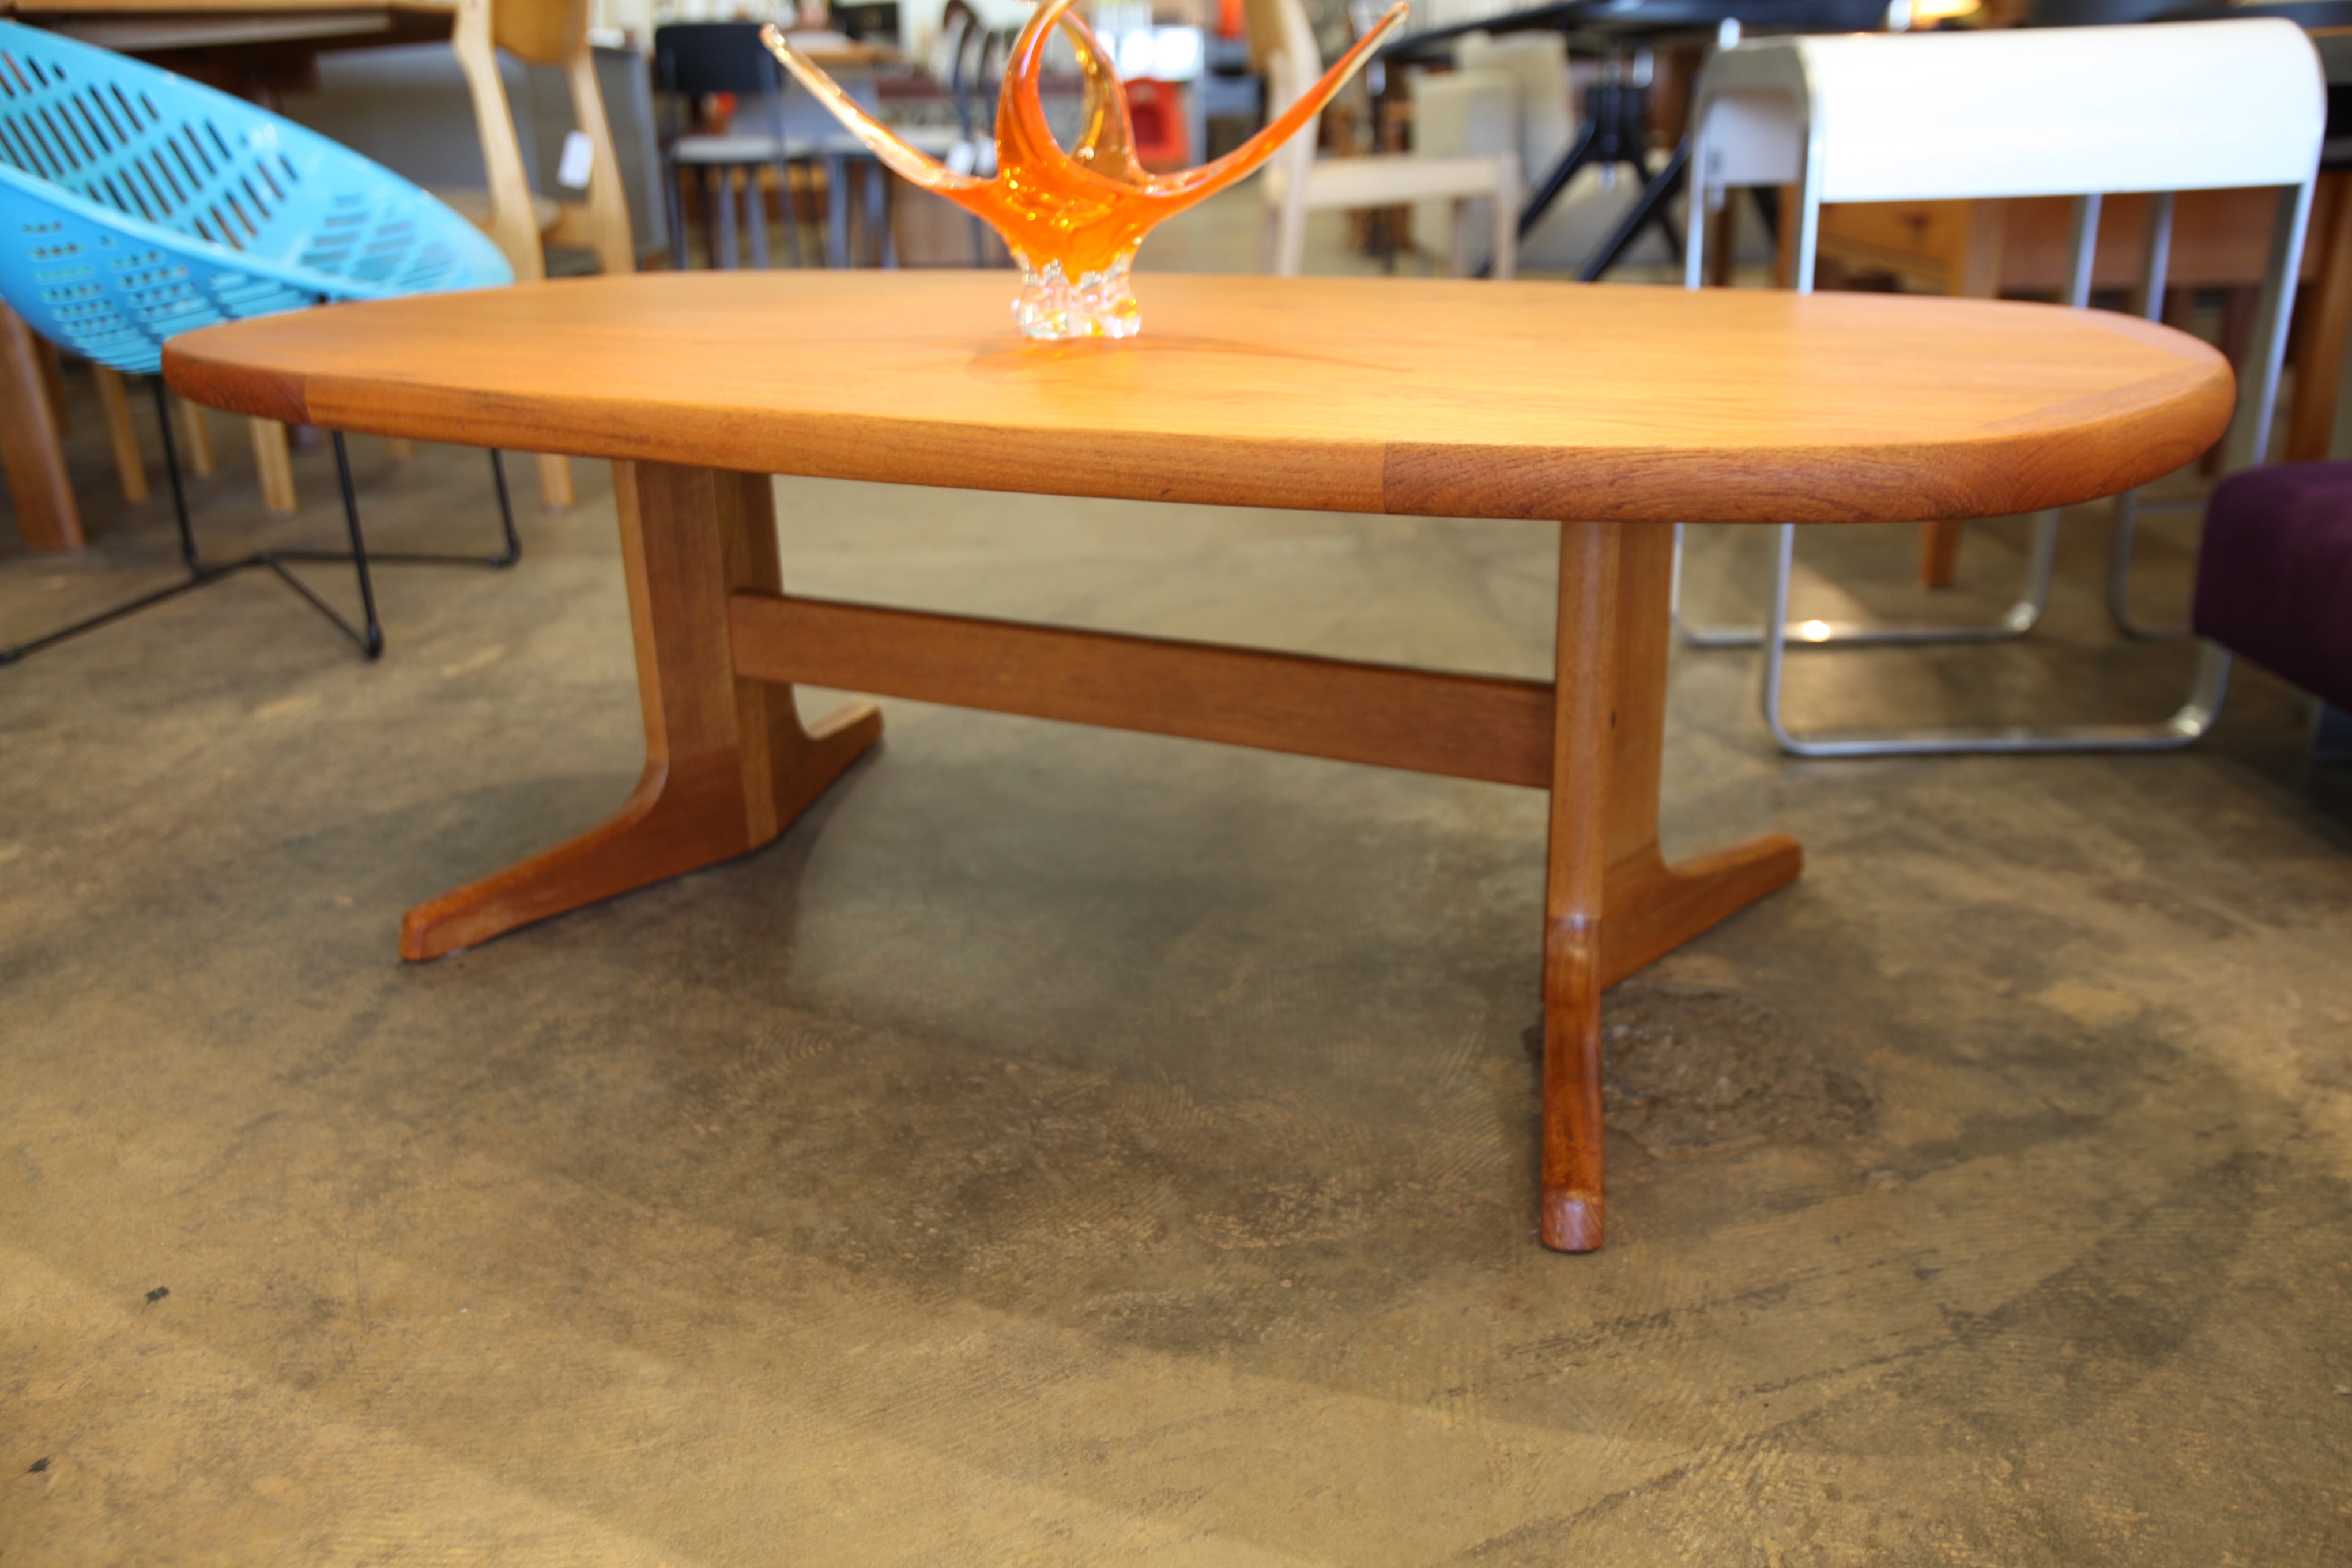 Vintage Oval Teak Coffee Table (54.5"L x 28.5"W x 17.25"H)